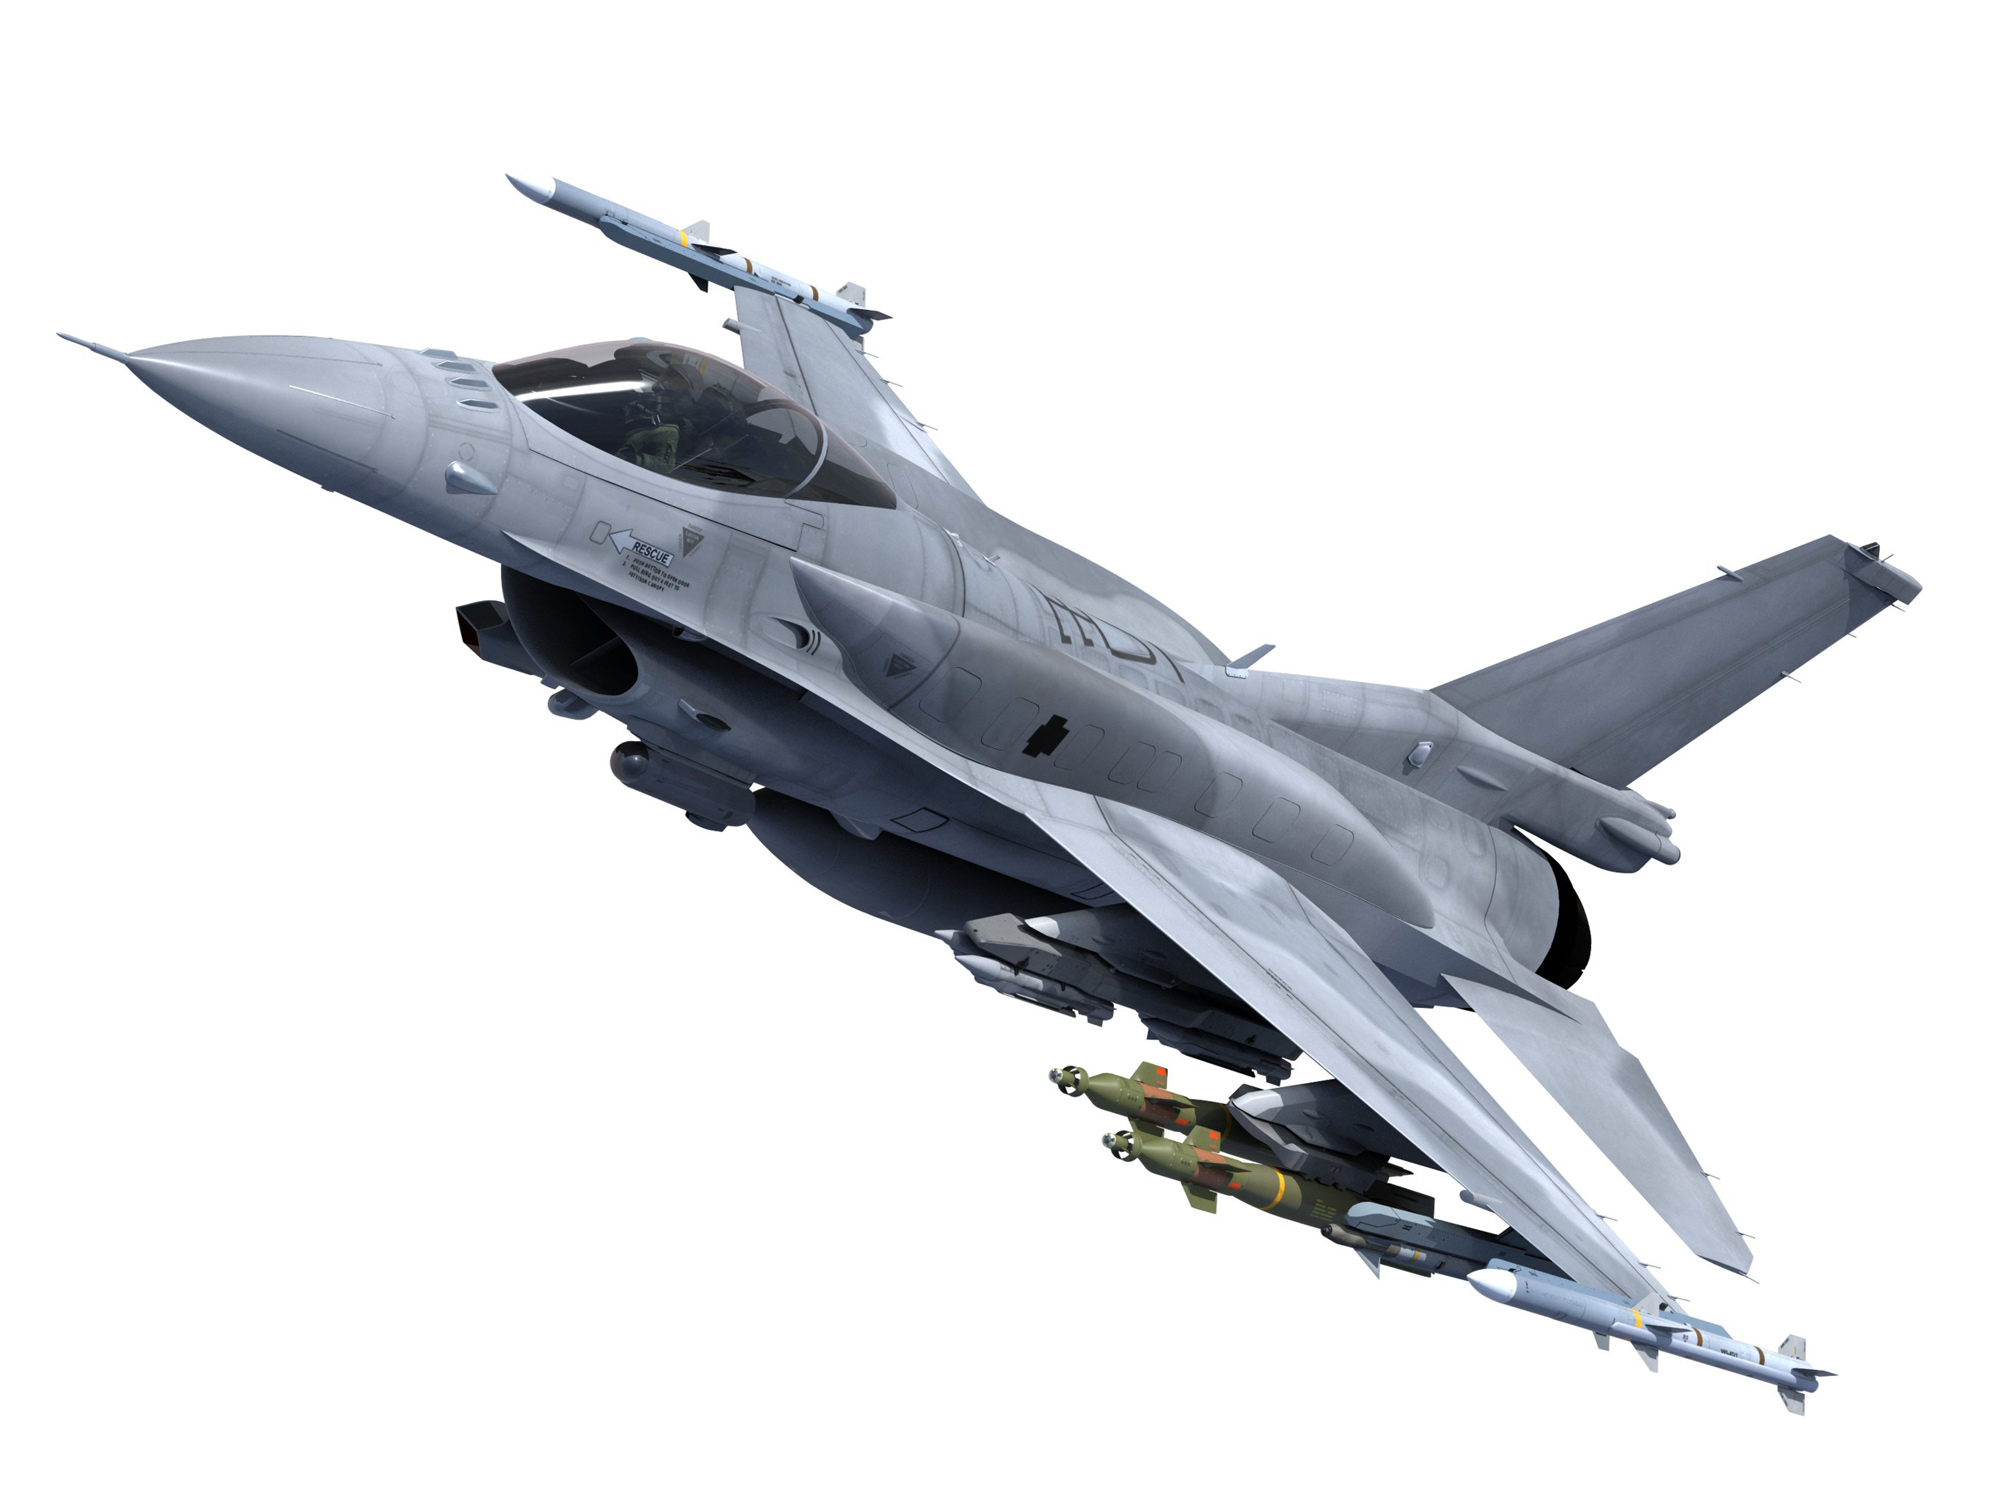 The Lockheed Martin F-16 Block 70 fighter jet.